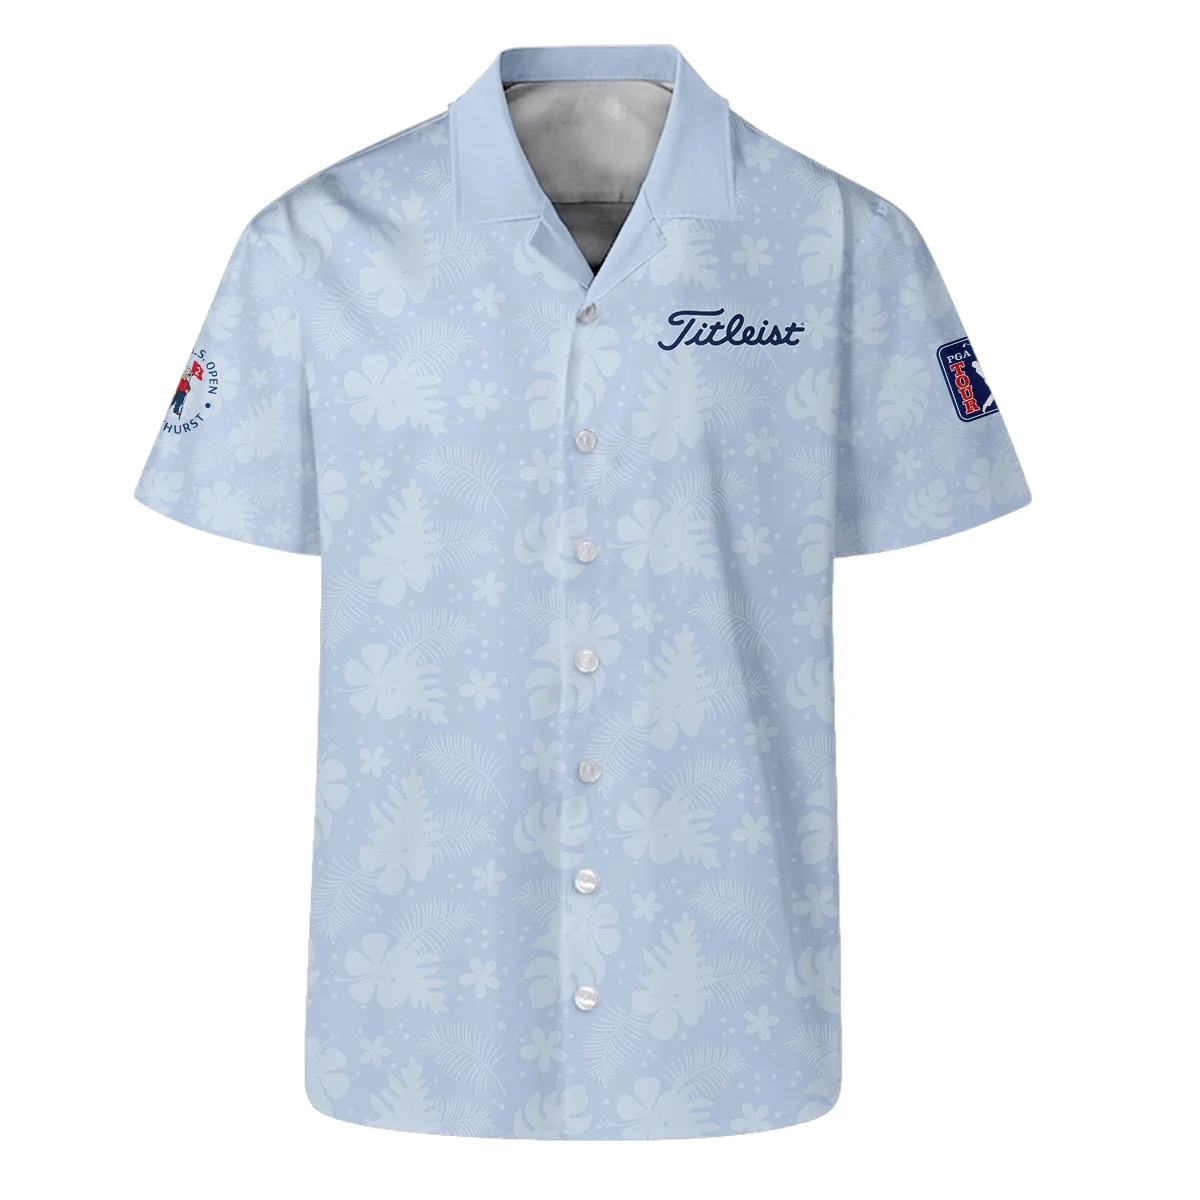 124th U.S. Open Pinehurst Titleist Golf Bomber Jacket Light Blue Pastel Floral Hawaiian Pattern All Over Print Bomber Jacket